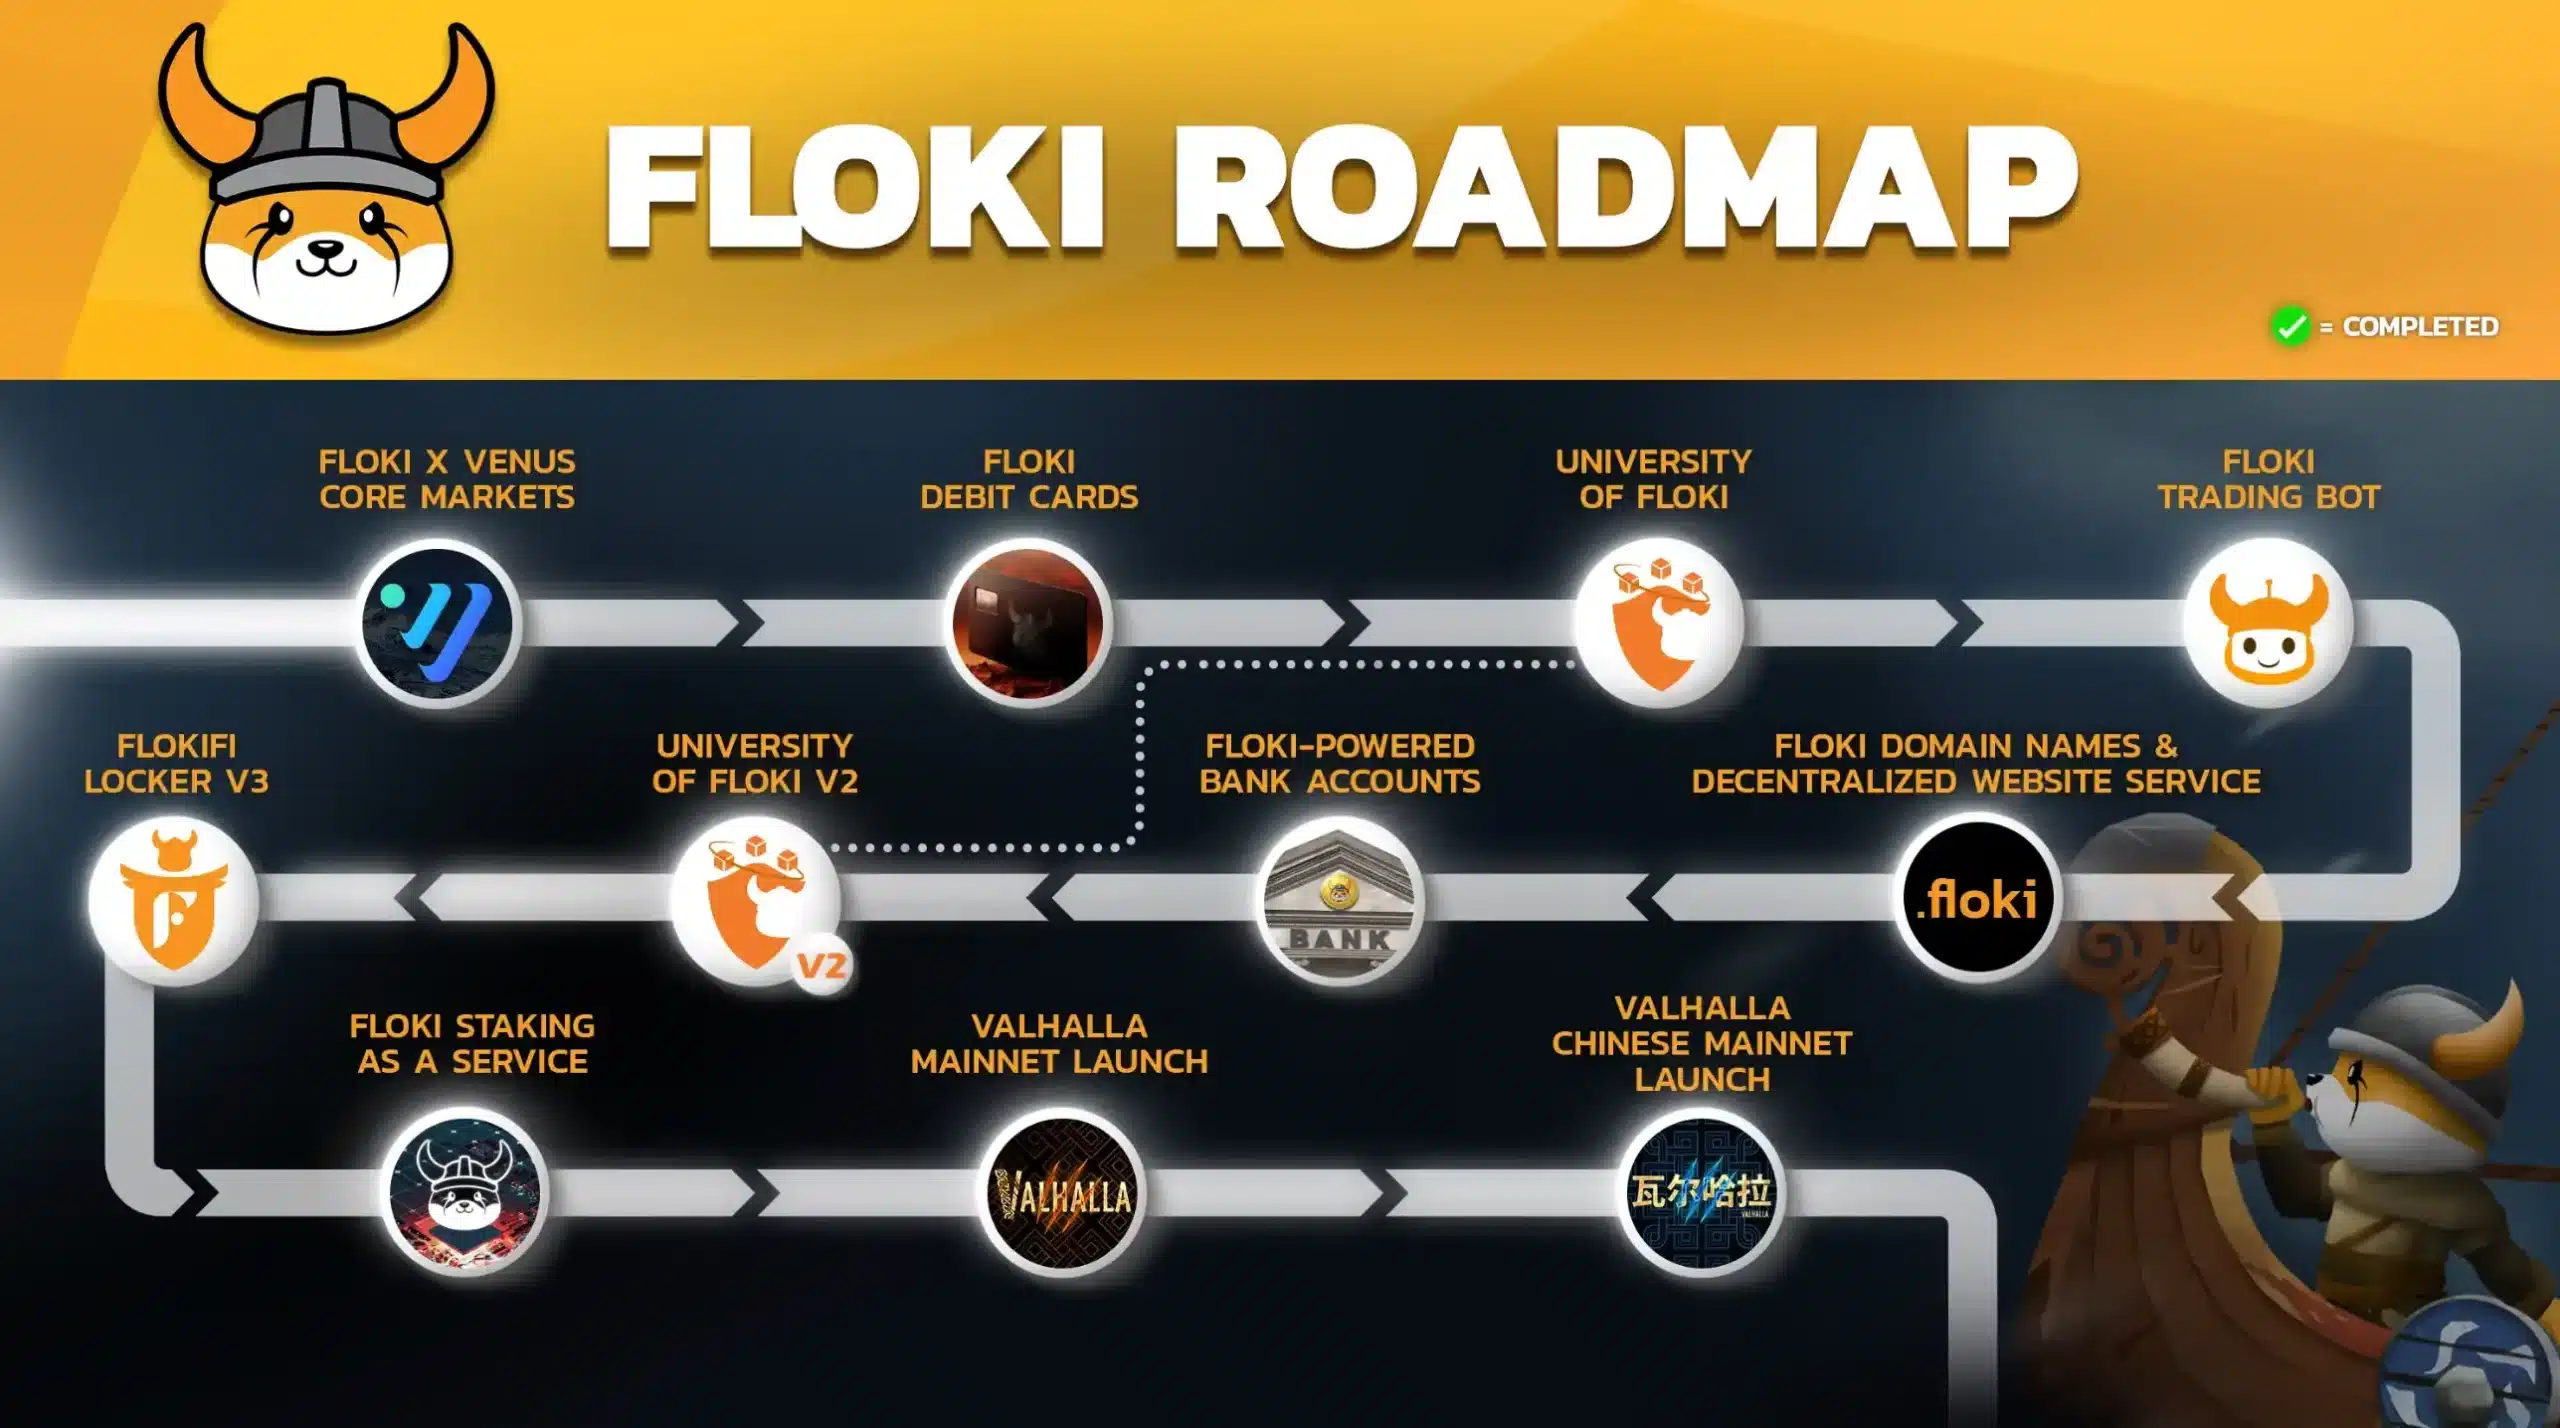 FLOKI's roadmap